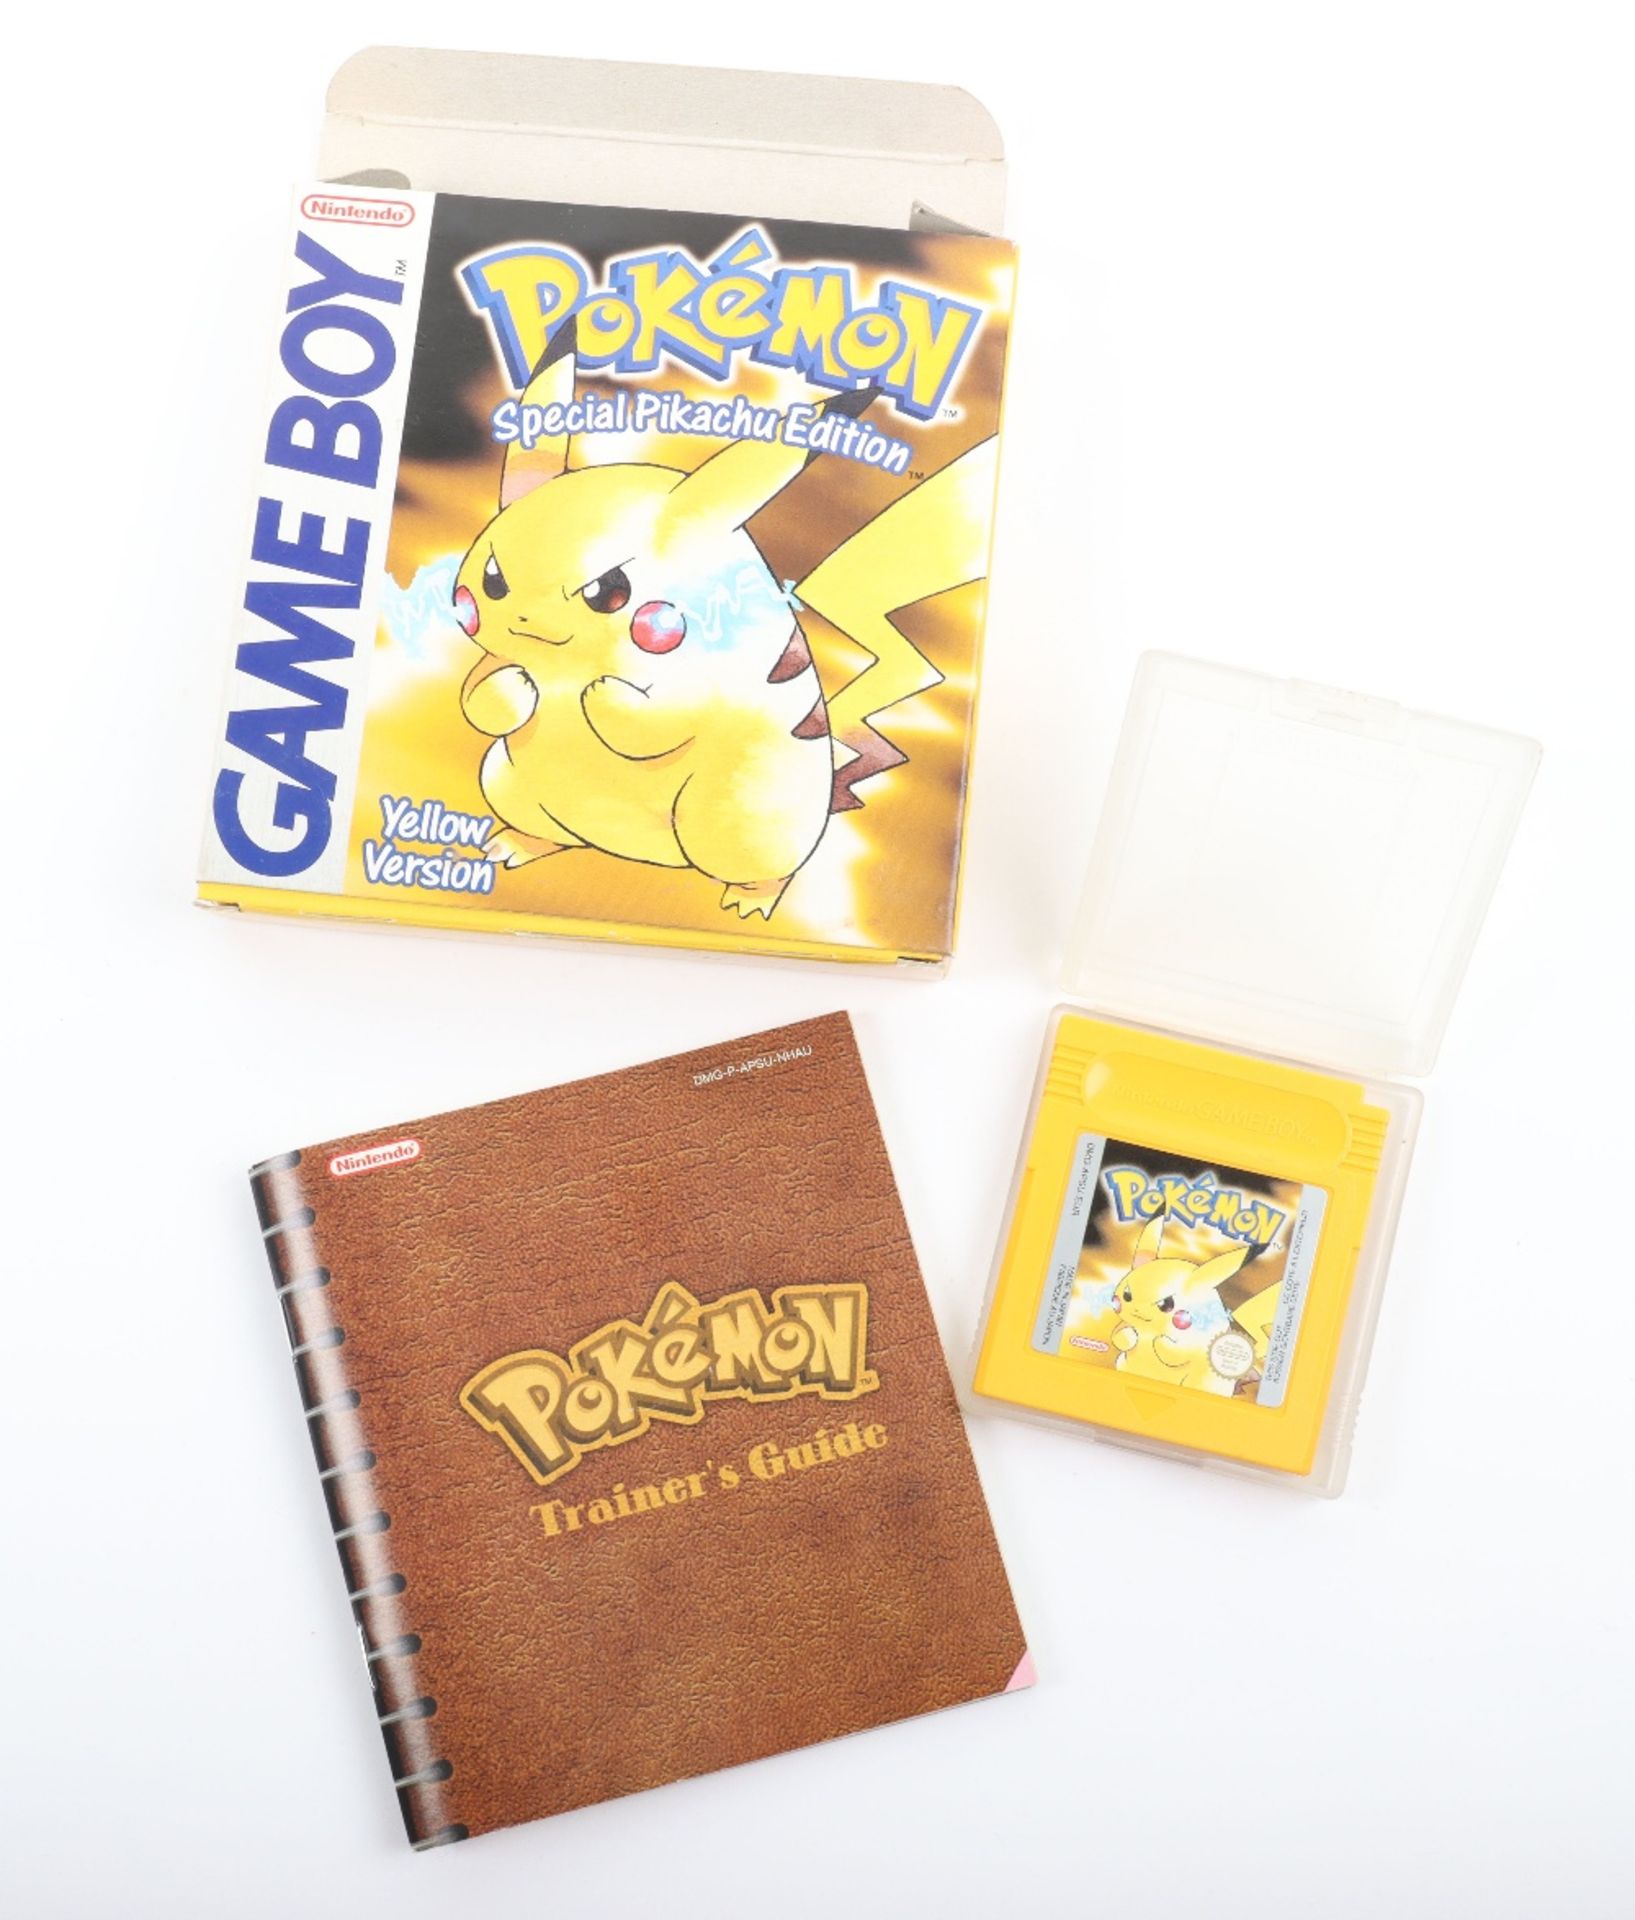 2000 Pokémon special Pikachu edition yellow version boxed - Bild 3 aus 3